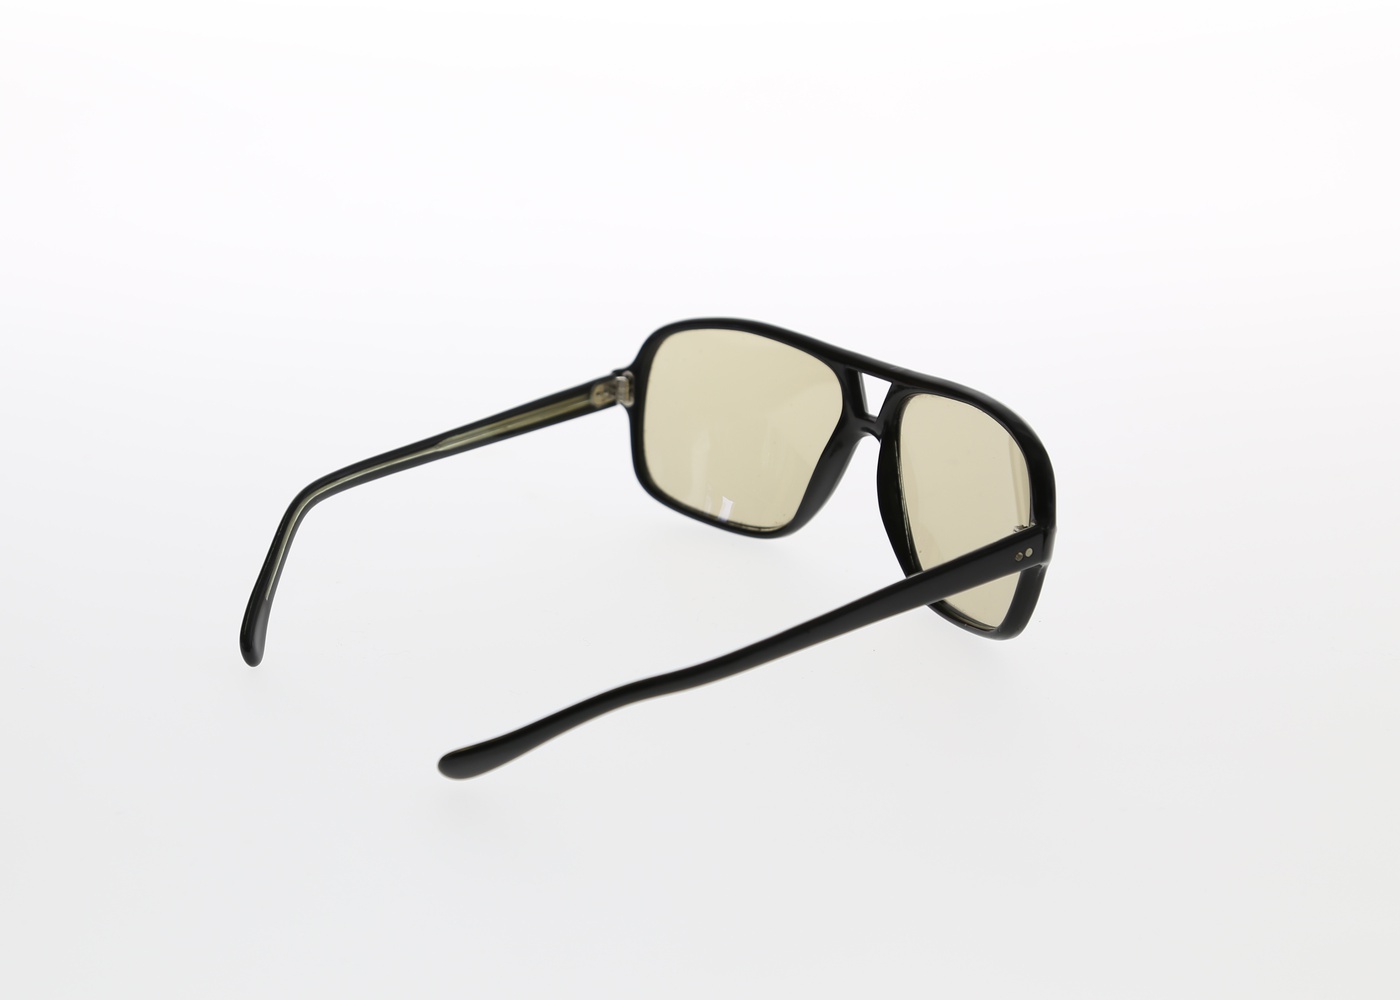 Vintage Japanese Carrera Style Sunglasses nyc